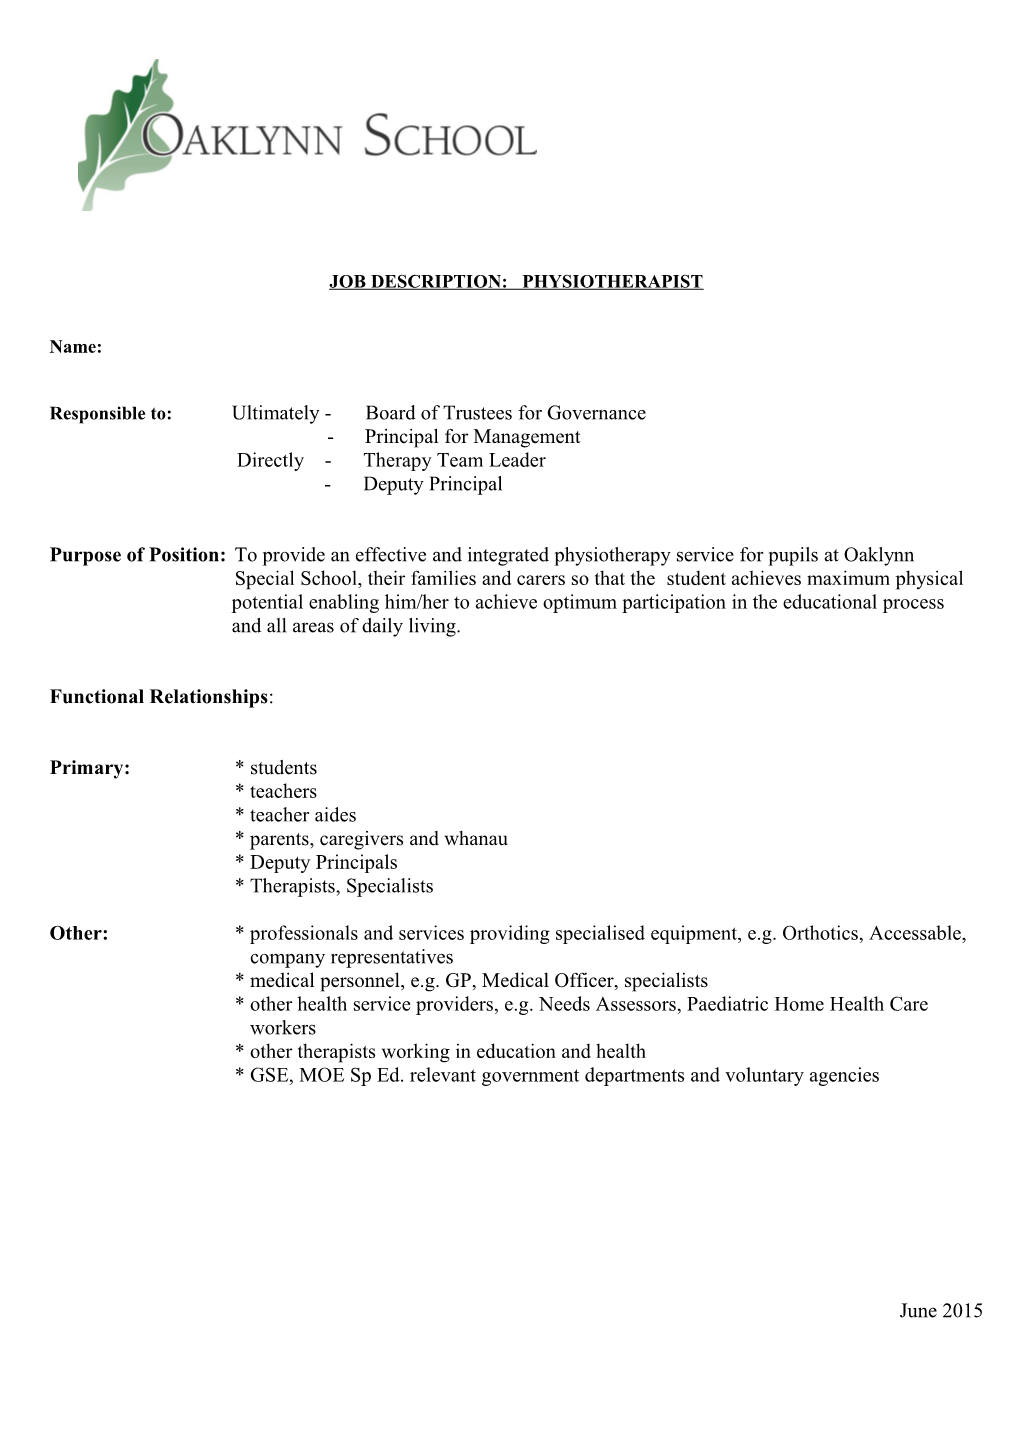 Job Description: Physiotherapist